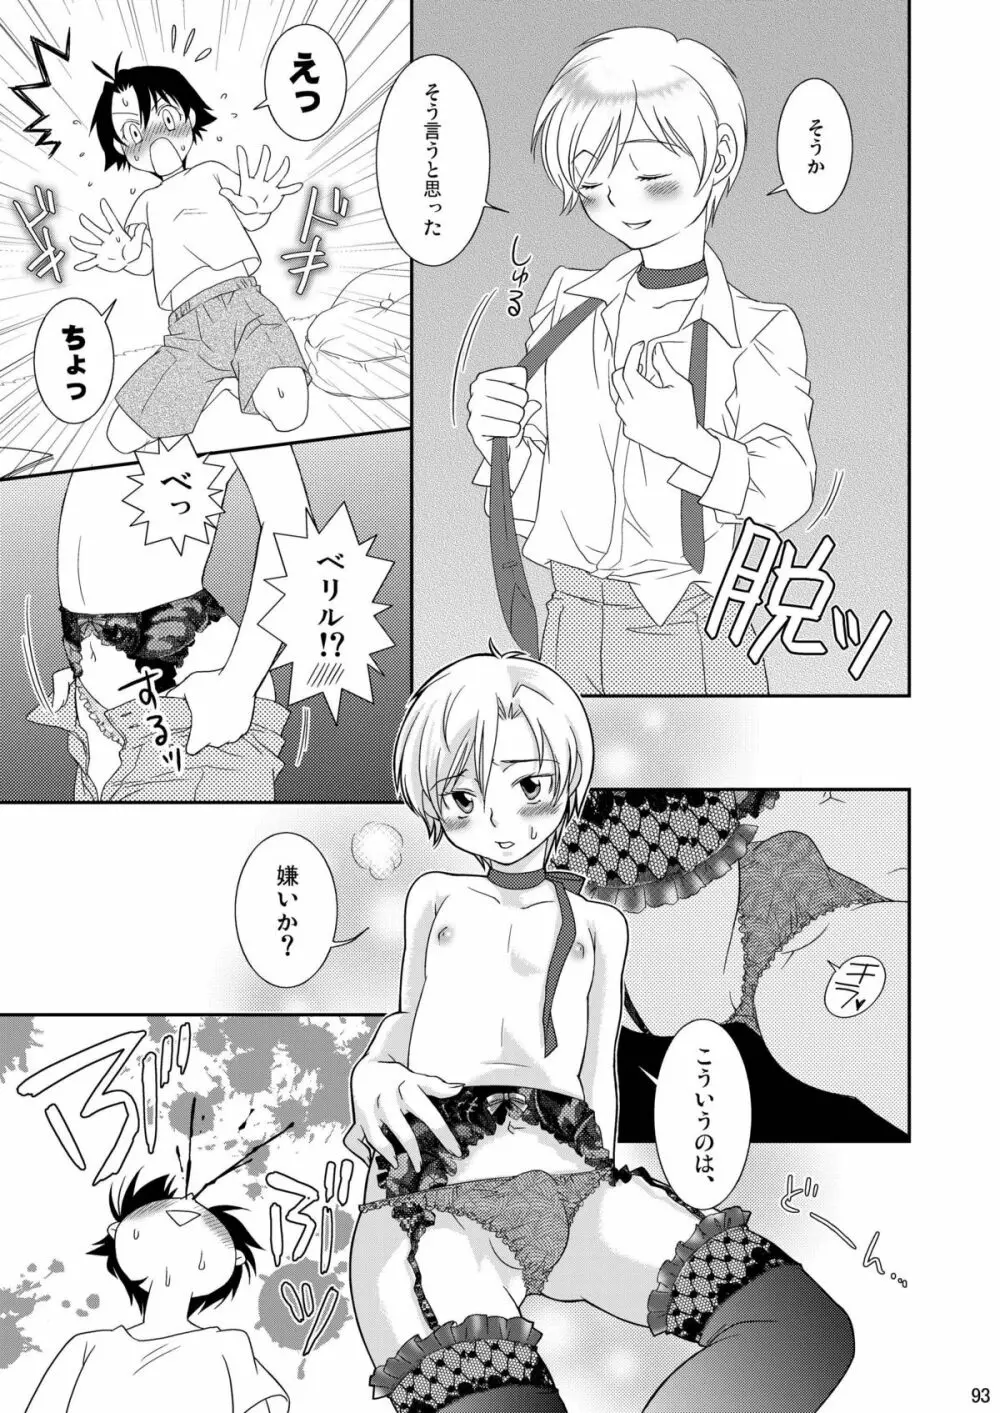 Re: ぷれい2 - page93